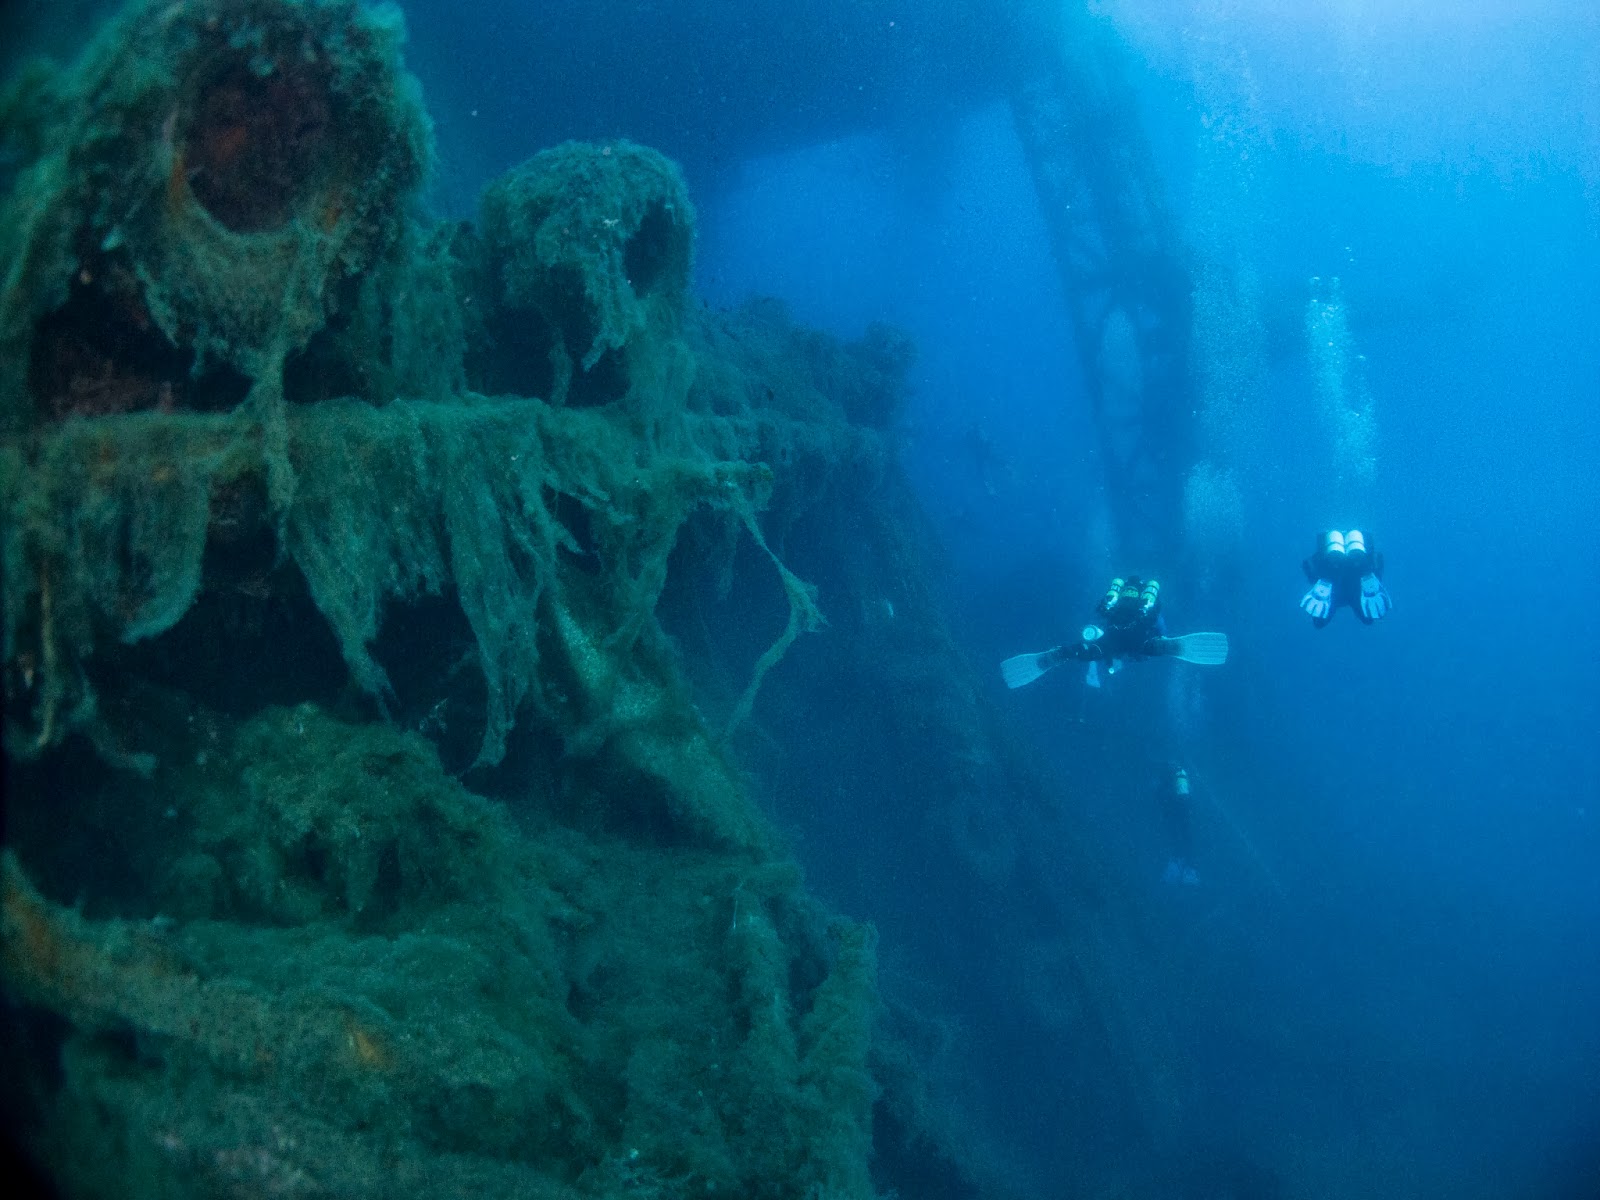 Shipwreck Scuba Diving Backgrounds